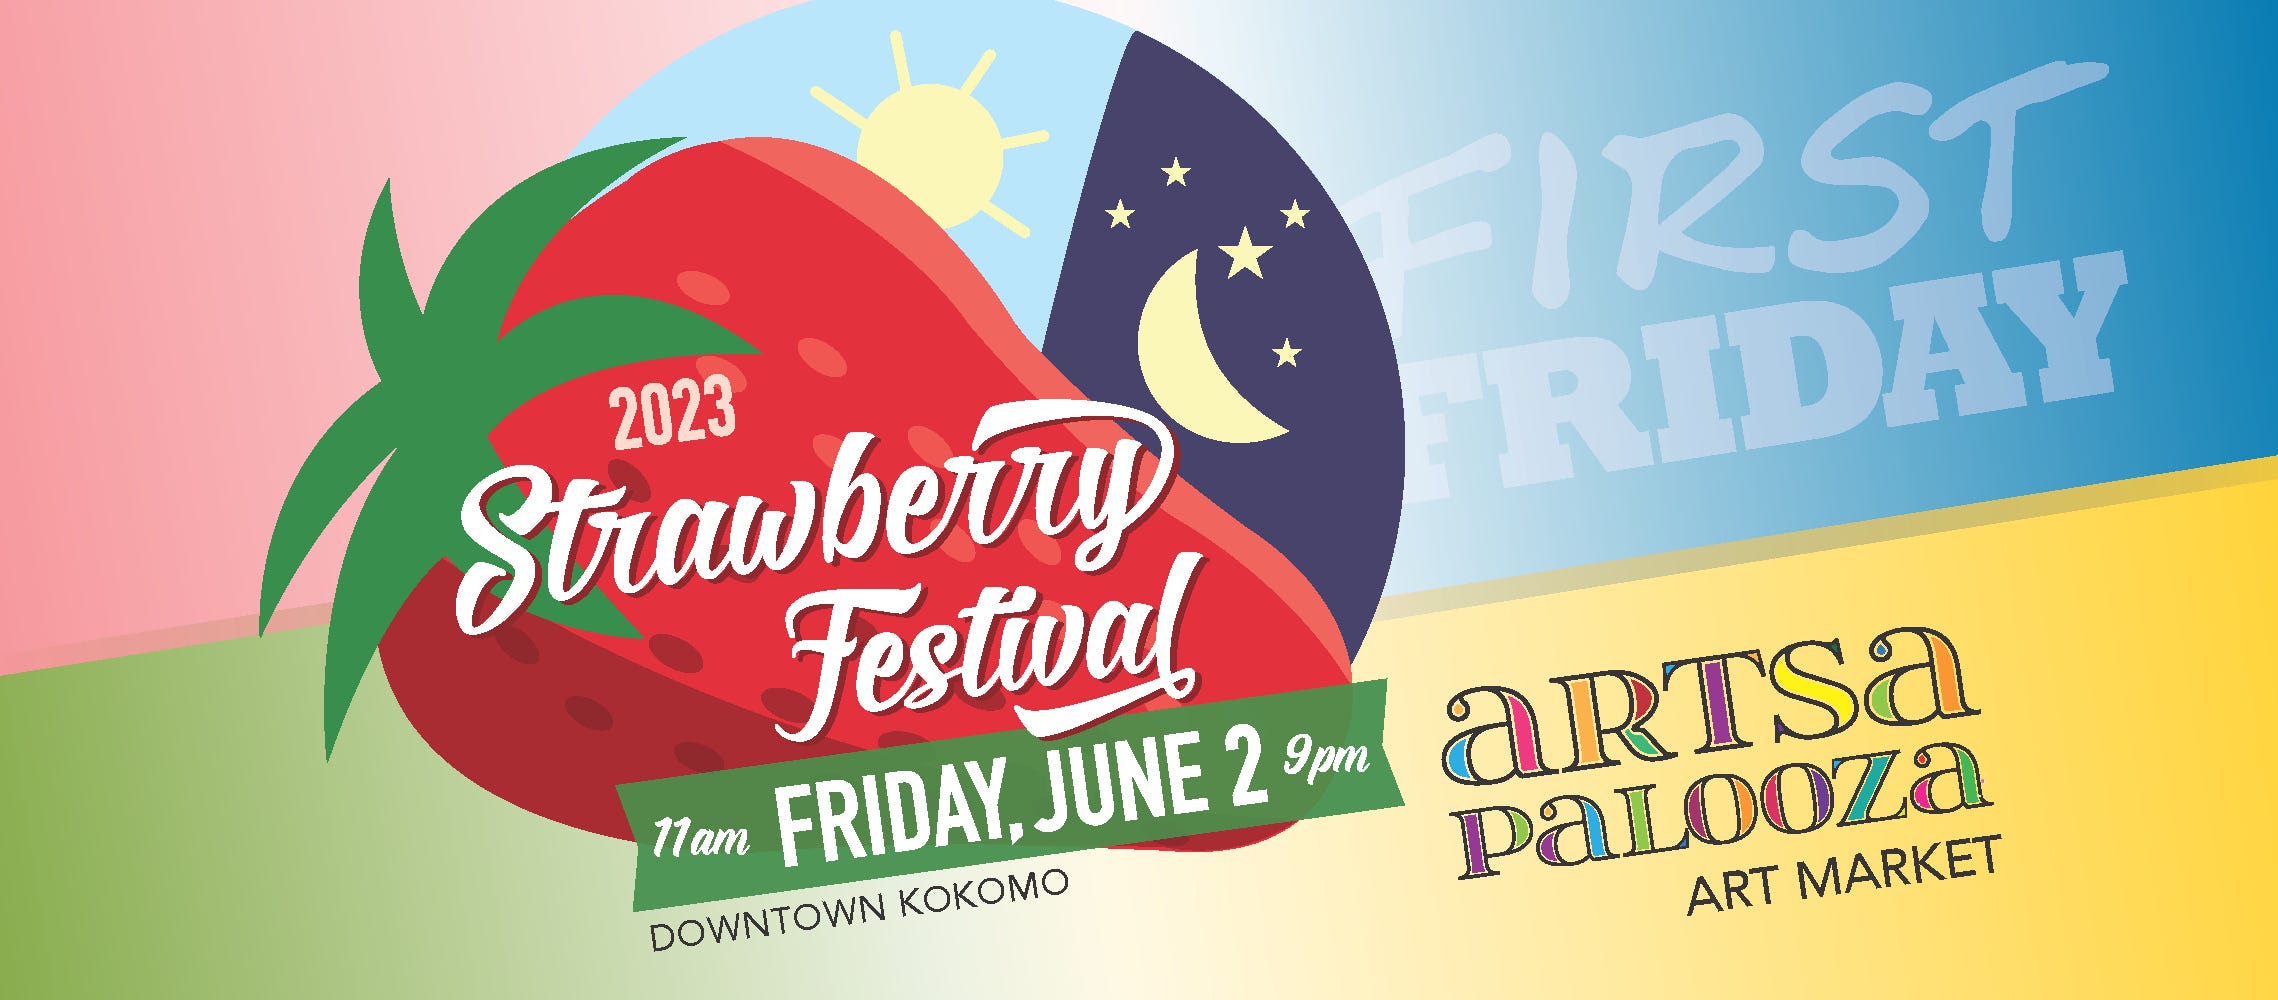 The Strawberry Festival is here! The Kokomo Lantern